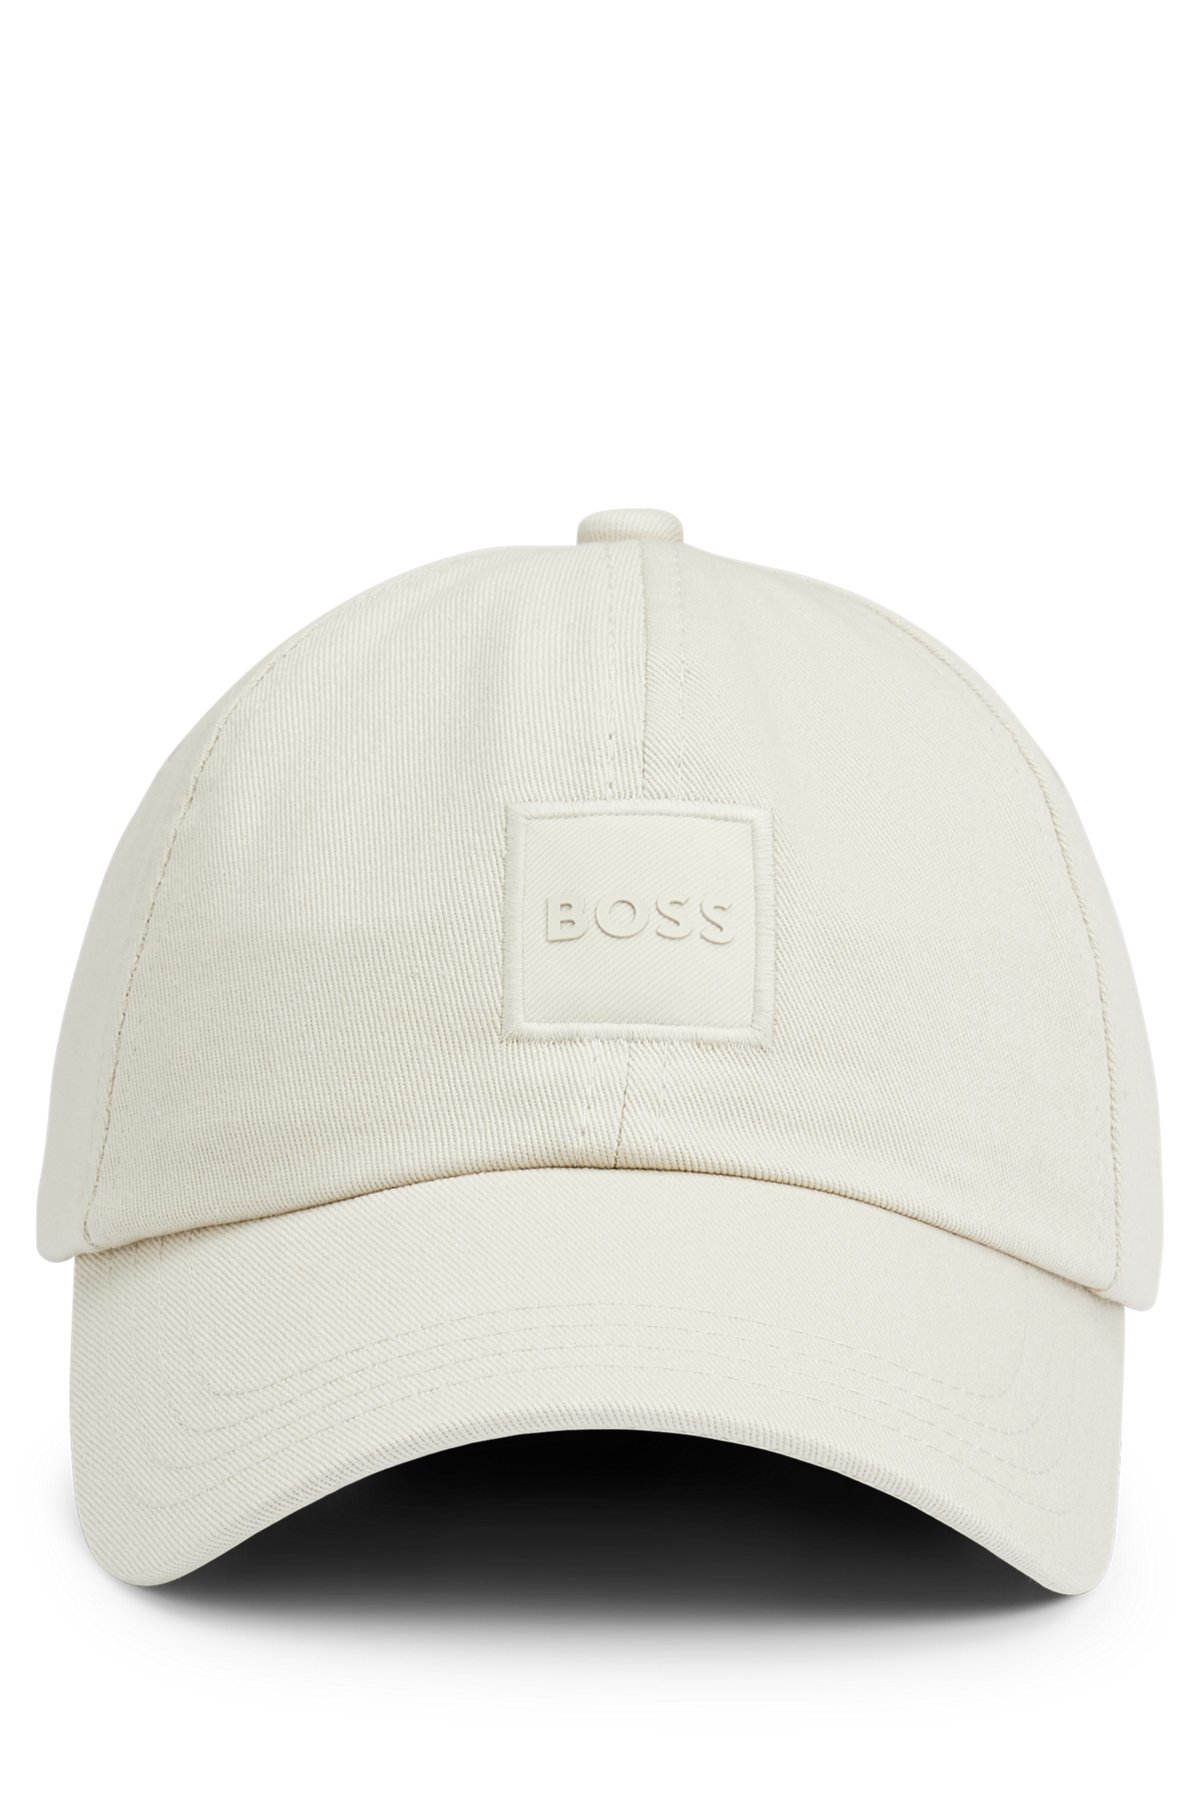 Cotton-twill cap with tonal logo patch, Light Beige